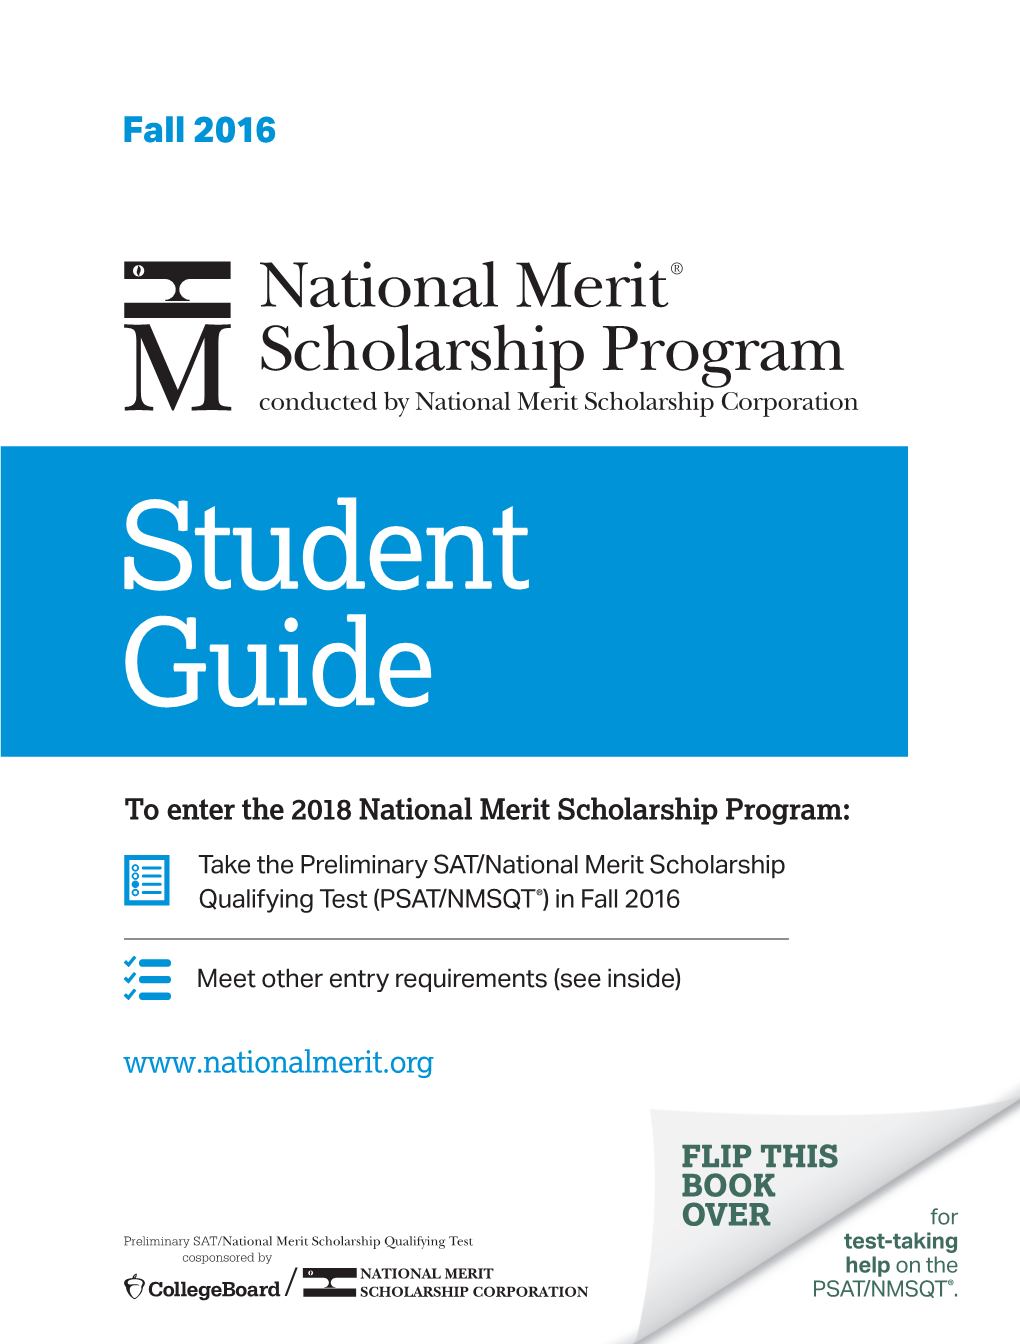 National Merit® Scholarship Program